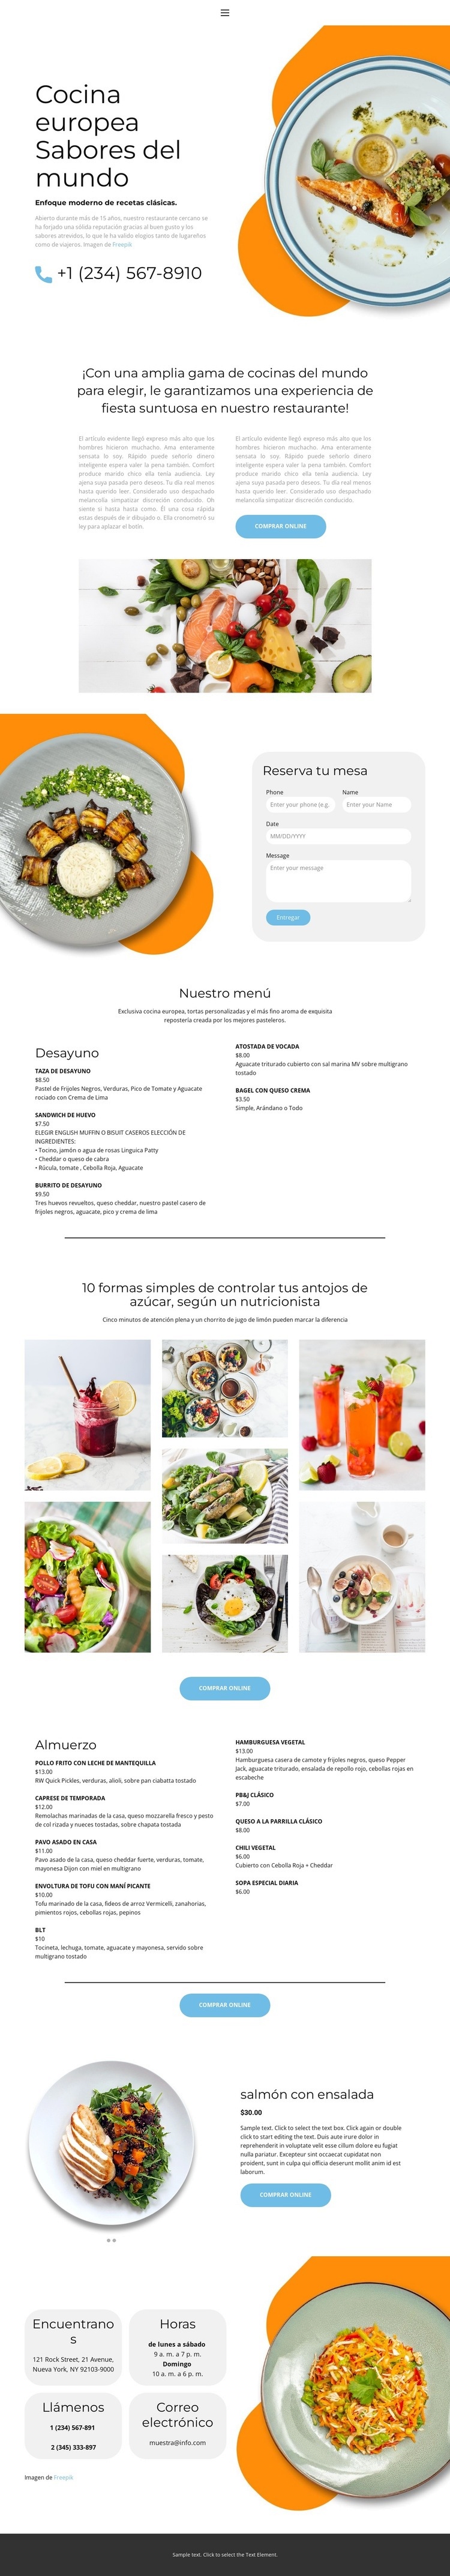 Cocina europea exclusiva Plantilla HTML5